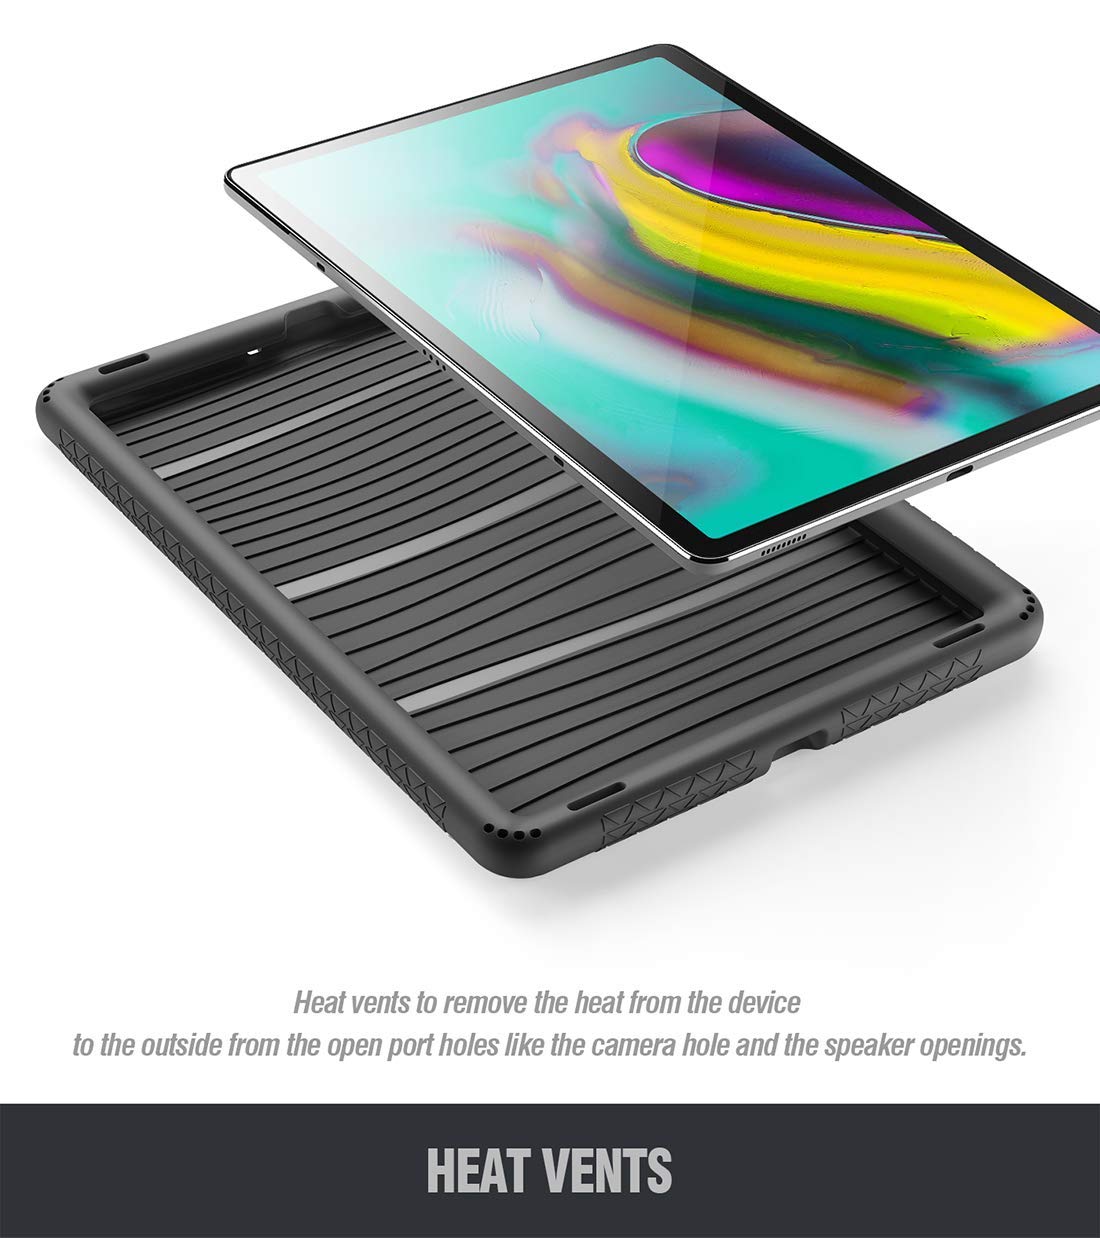 Galaxy Tab S5E Case